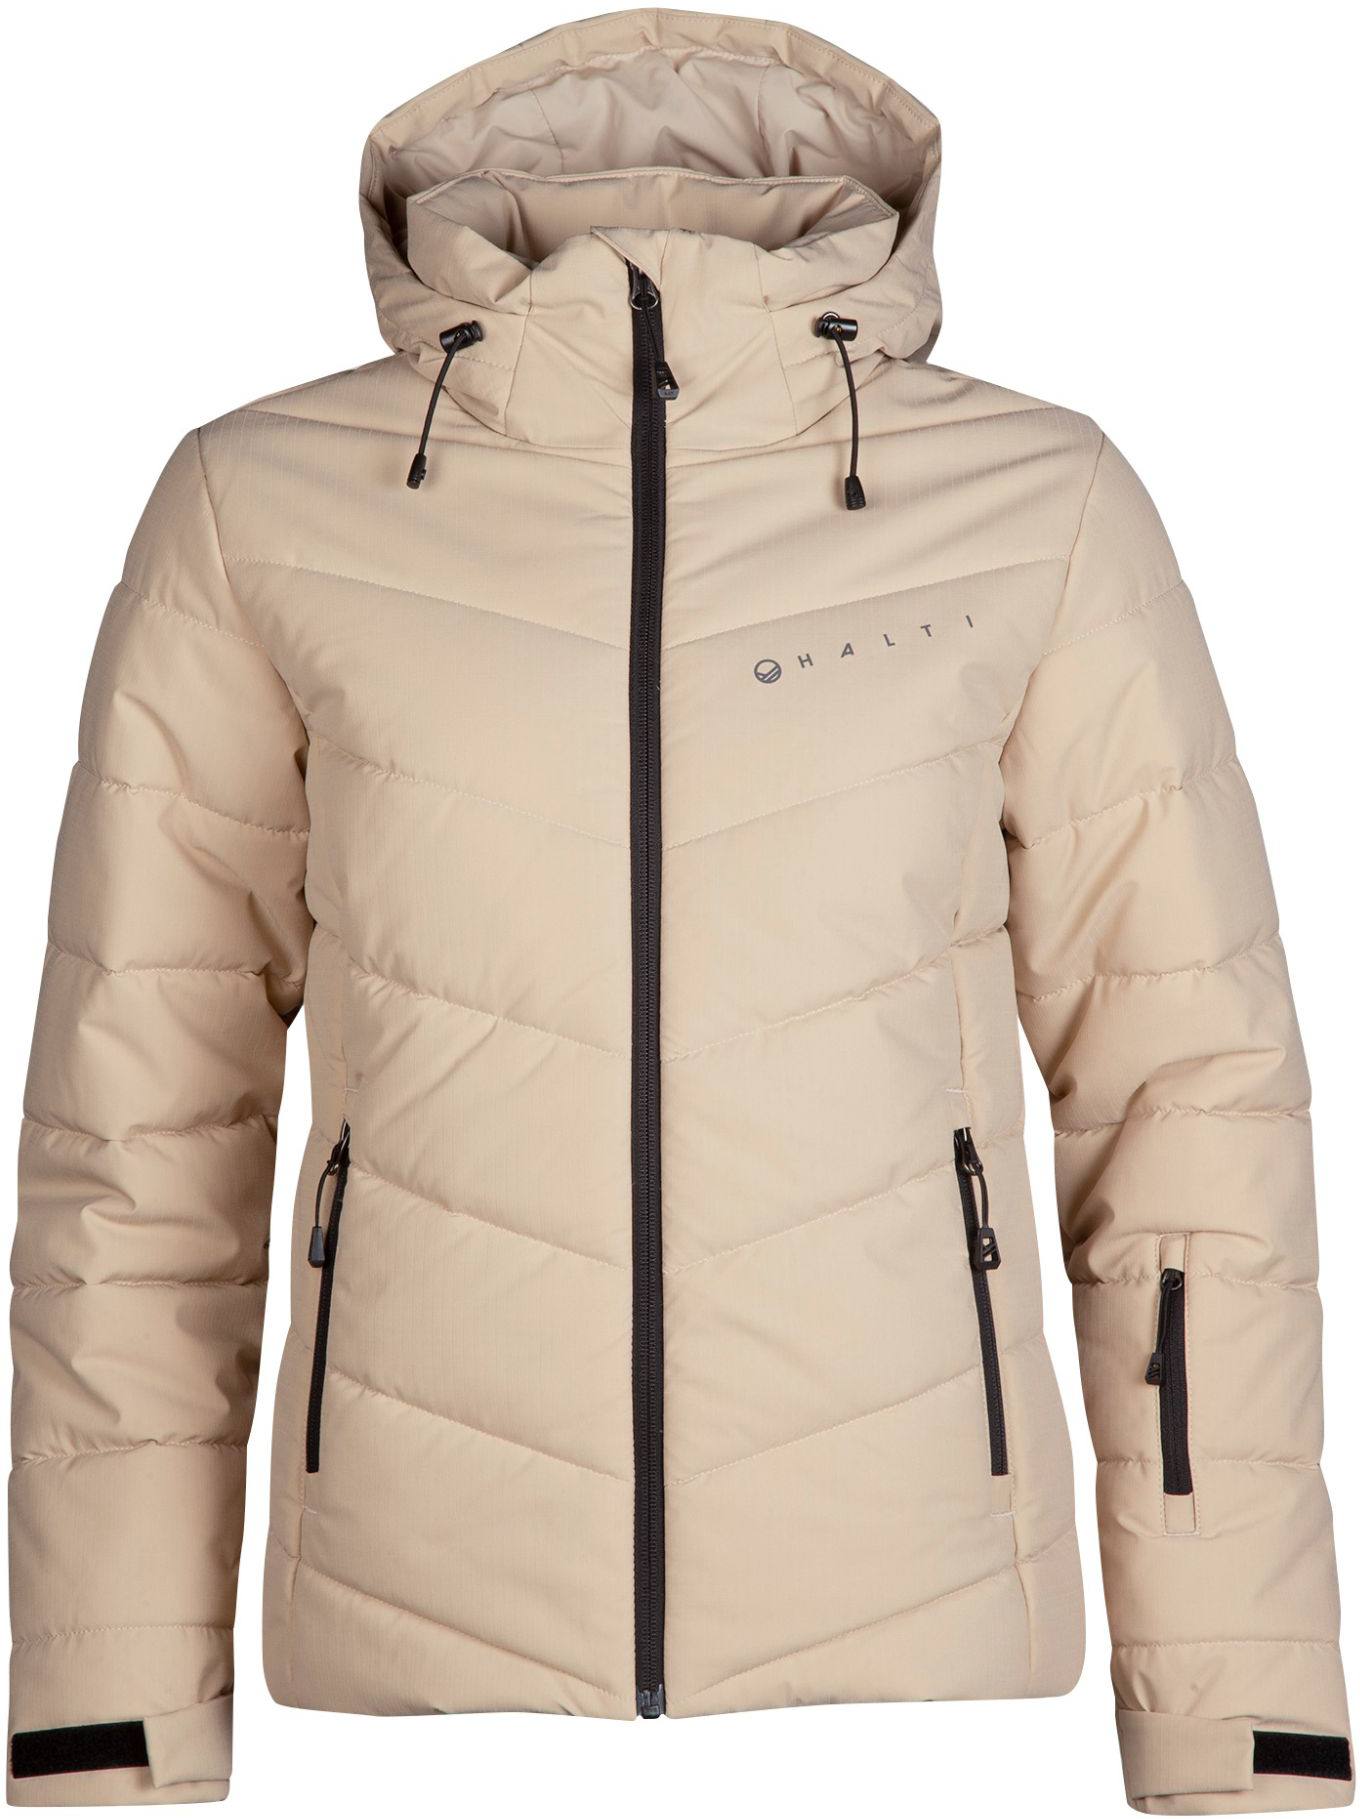 Halti Women’s Mellow + Ski Puffer Jacket